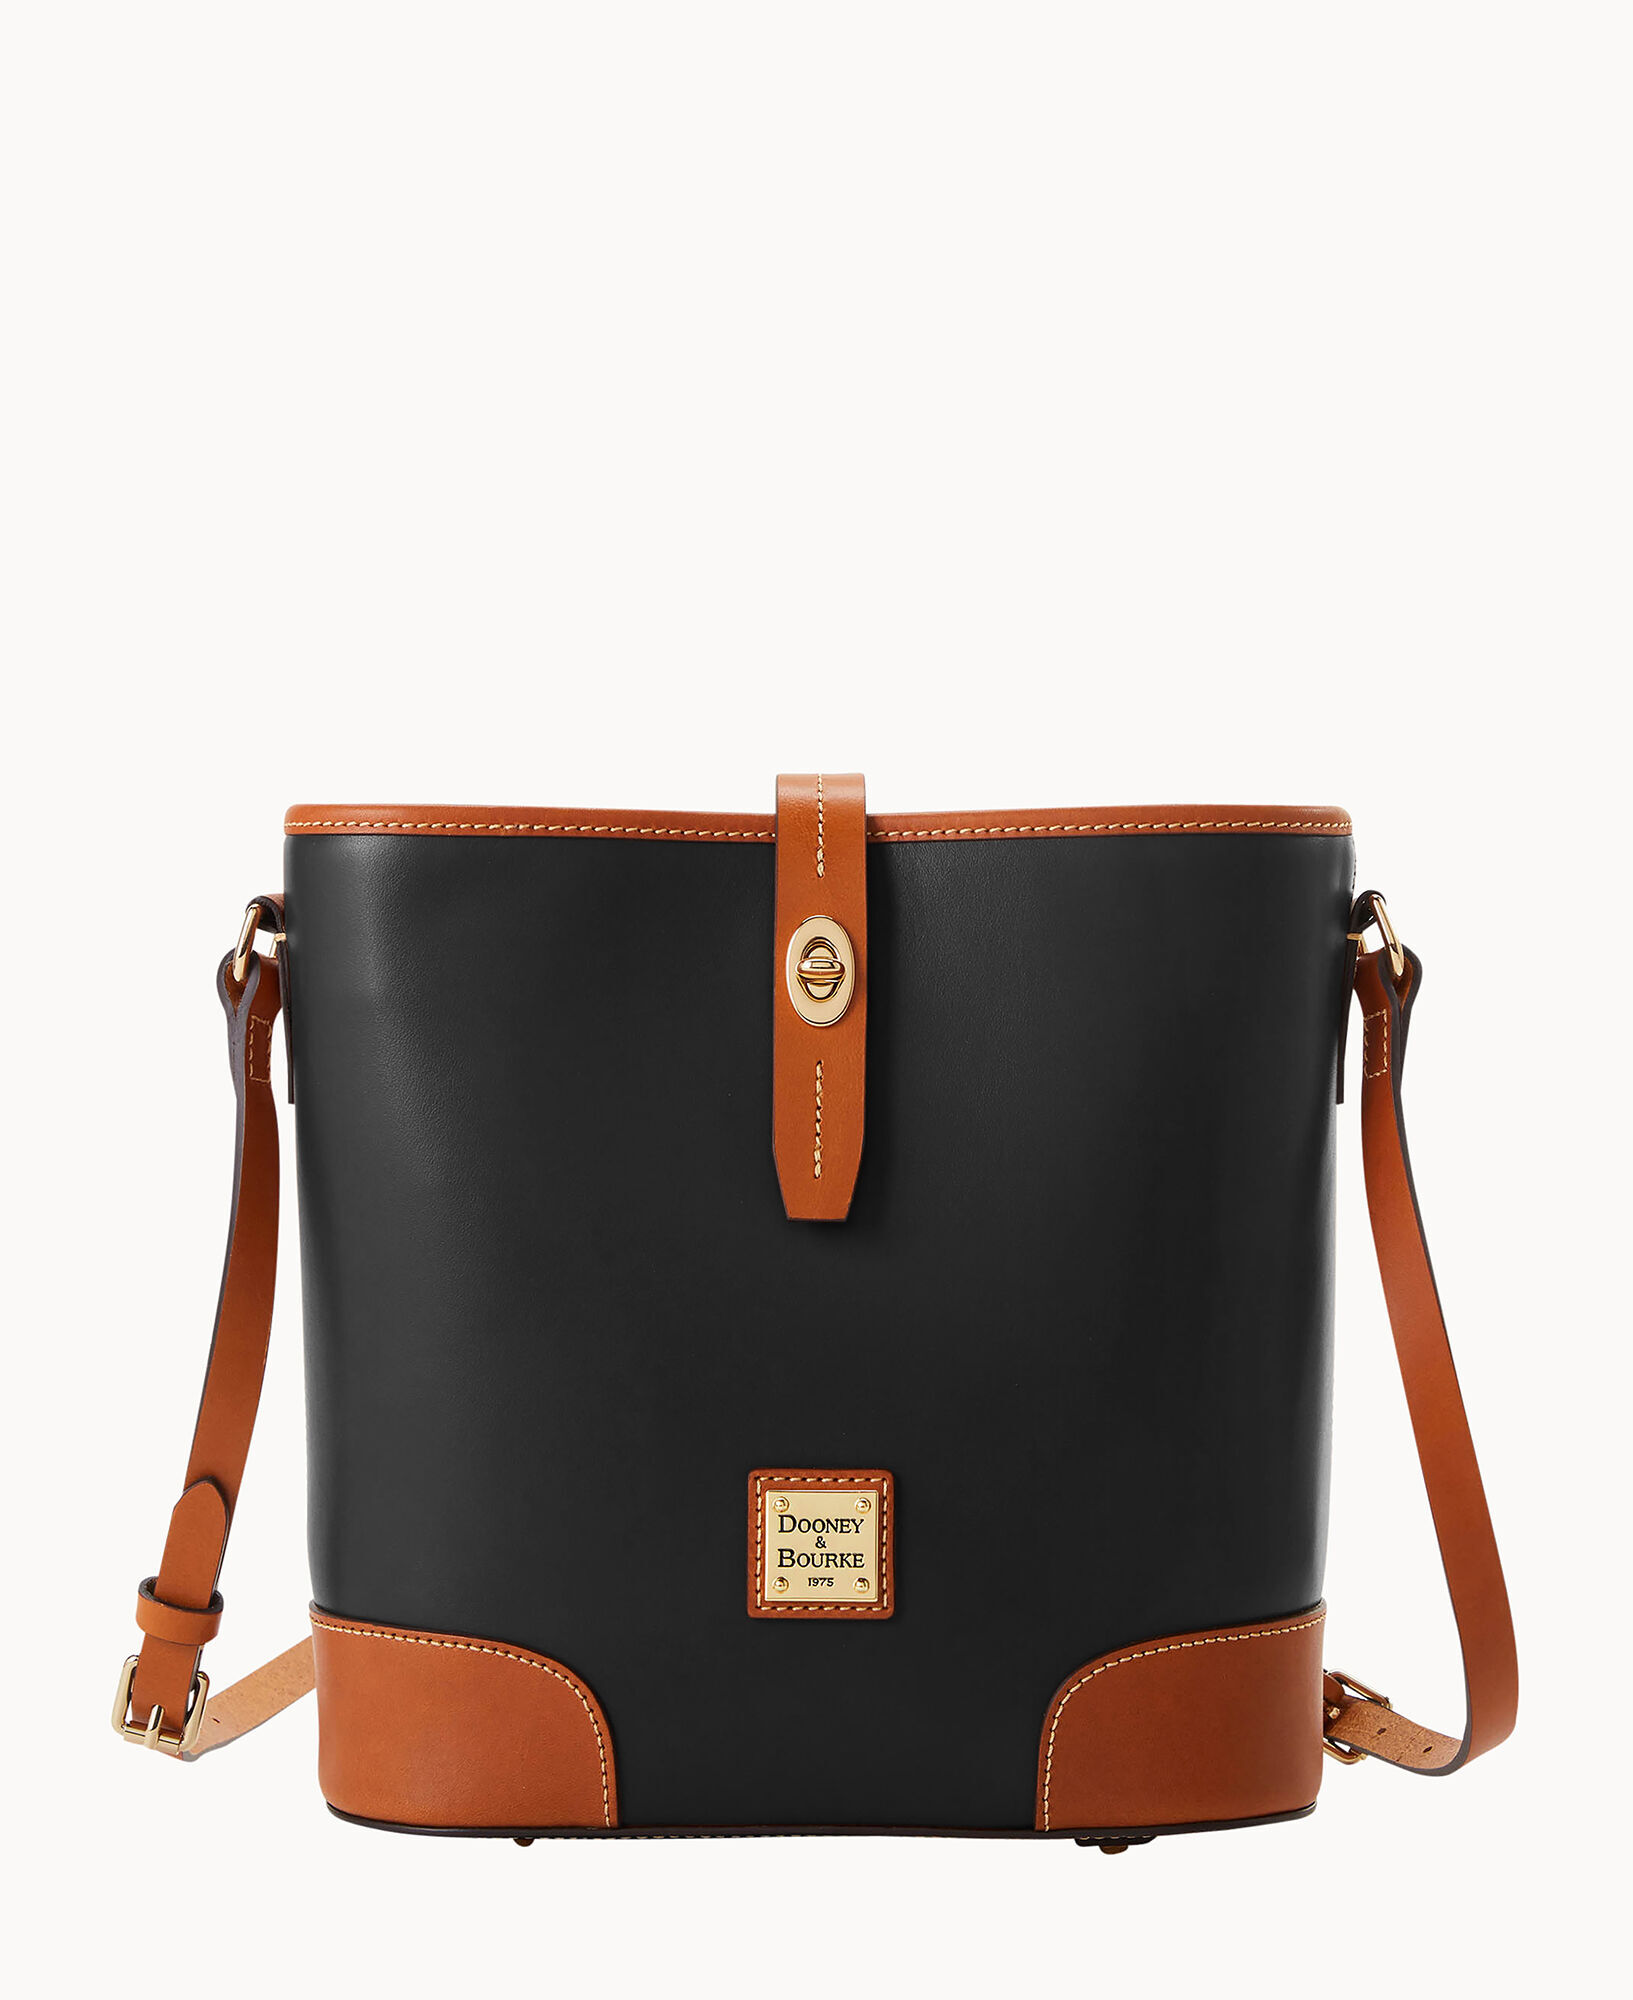 Dooney & Bourke Handbag, Wexford Leather Crossbody - Black: Handbags